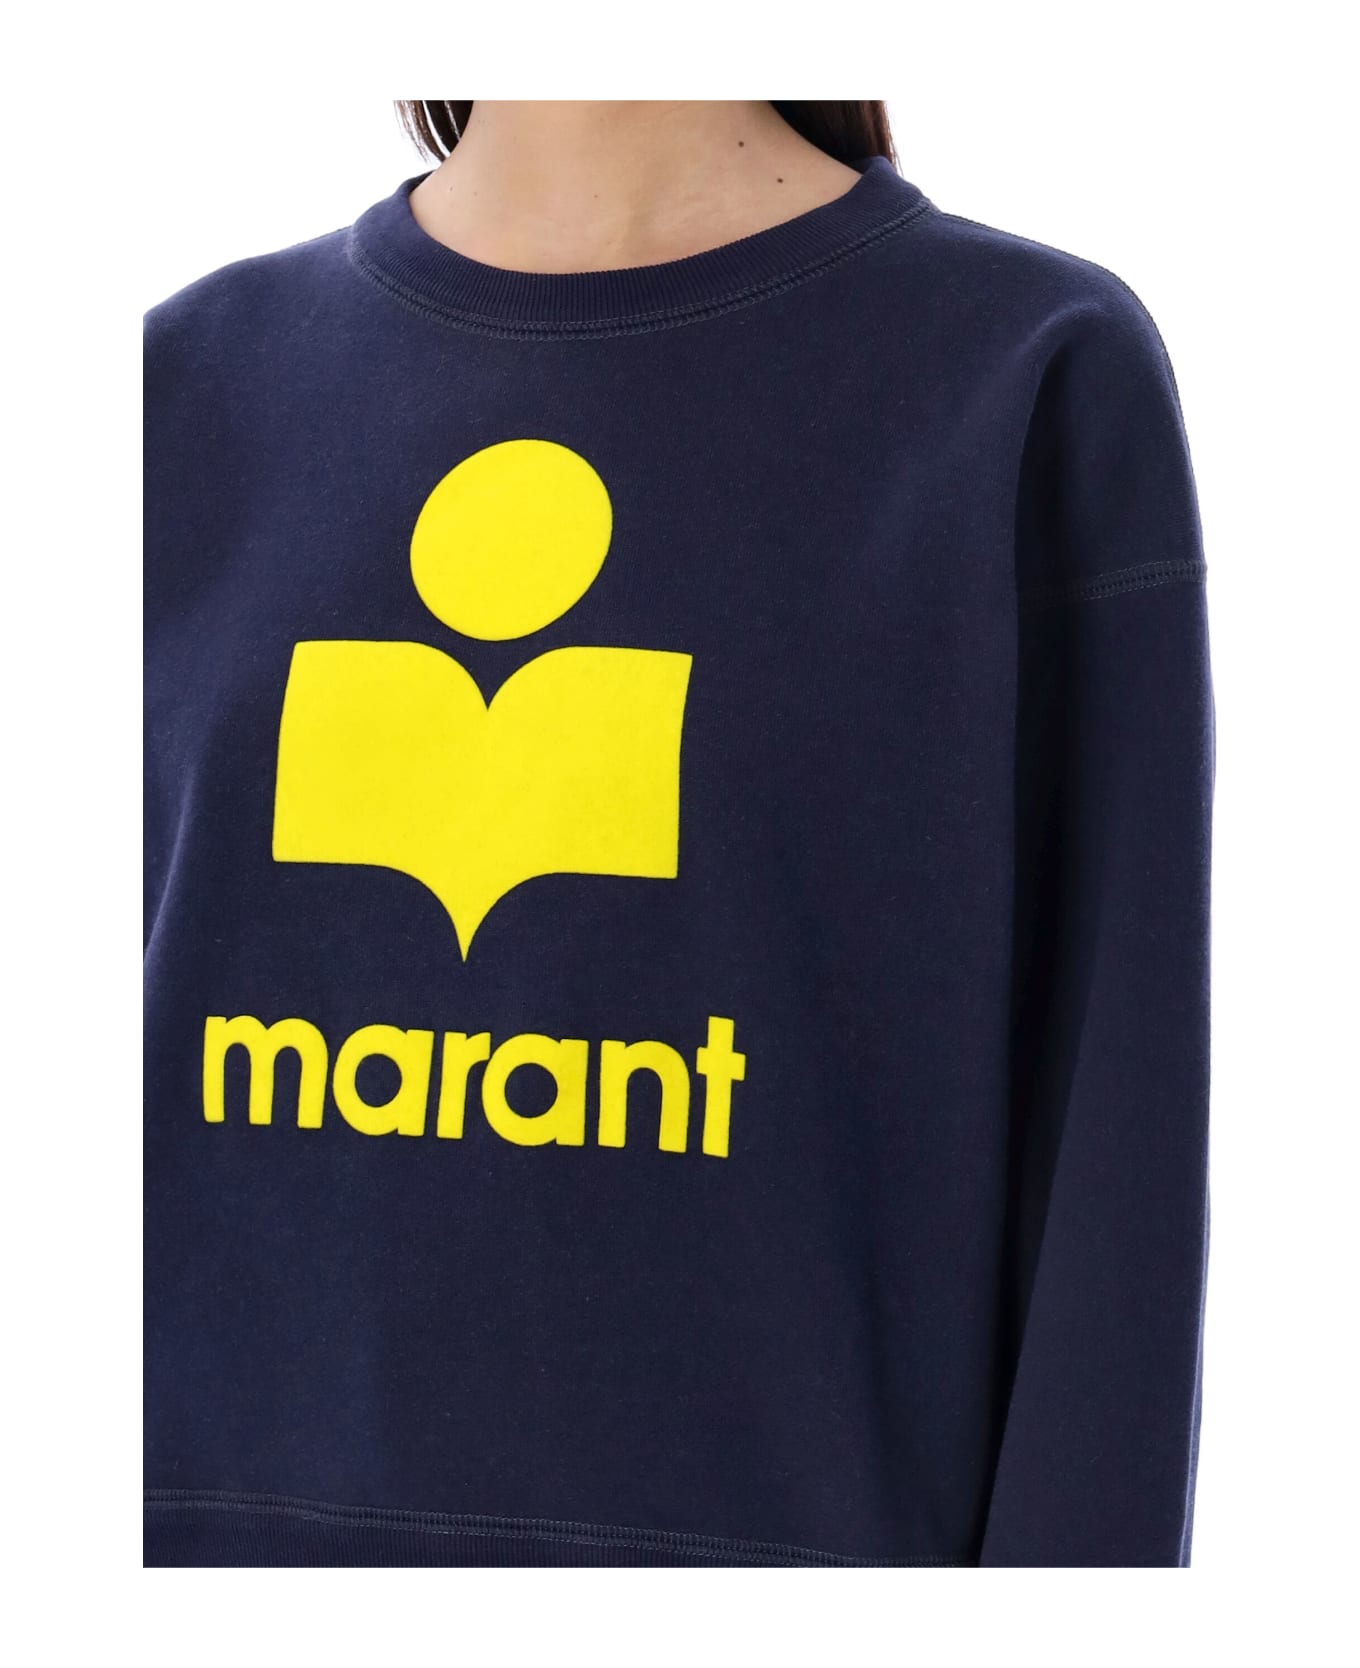 Marant Étoile Logo Printed Crewneck Sweatshirt - Navy/yellow